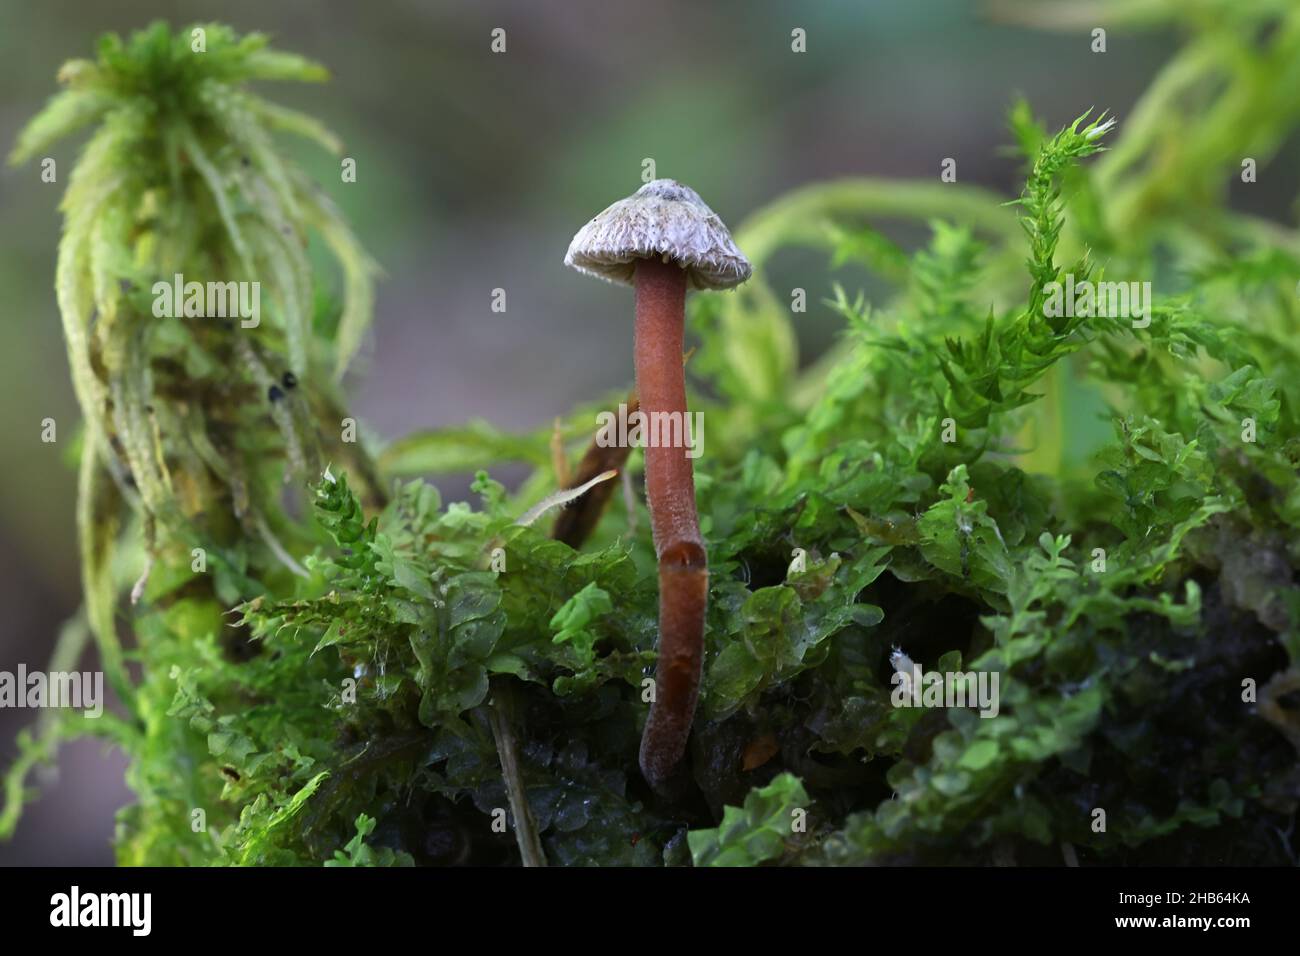 Inocybe petiginosa, commonly known as scurfy fibrecap, wild mushroom from Finland Stock Photo